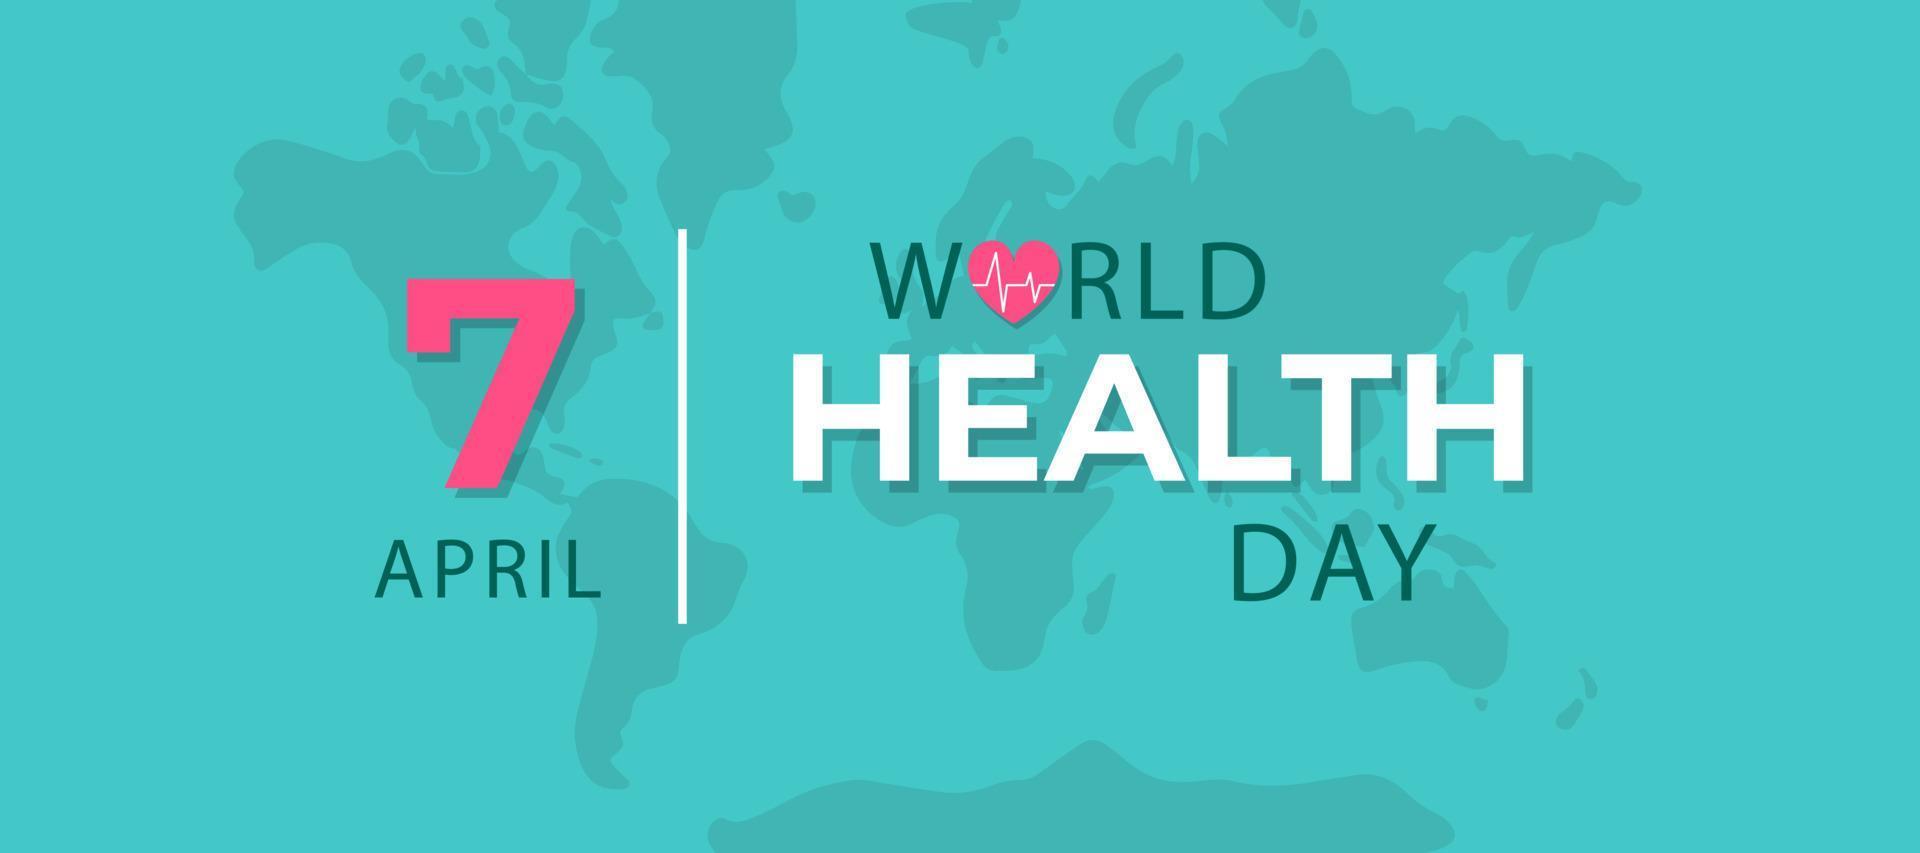 cartaz de design vetorial do dia mundial da saúde vetor